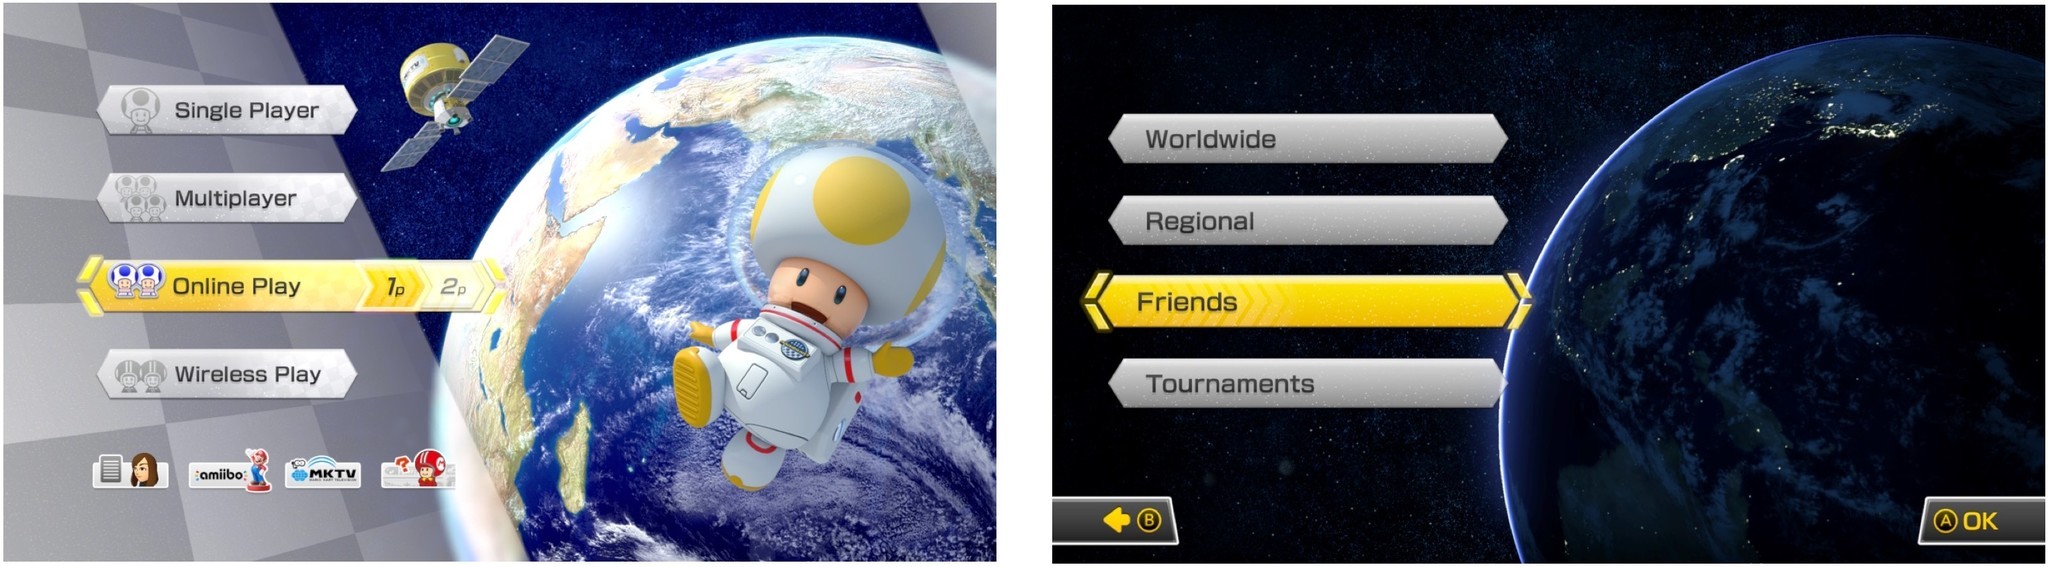 Play online for Mario Kart 8 Deluxe